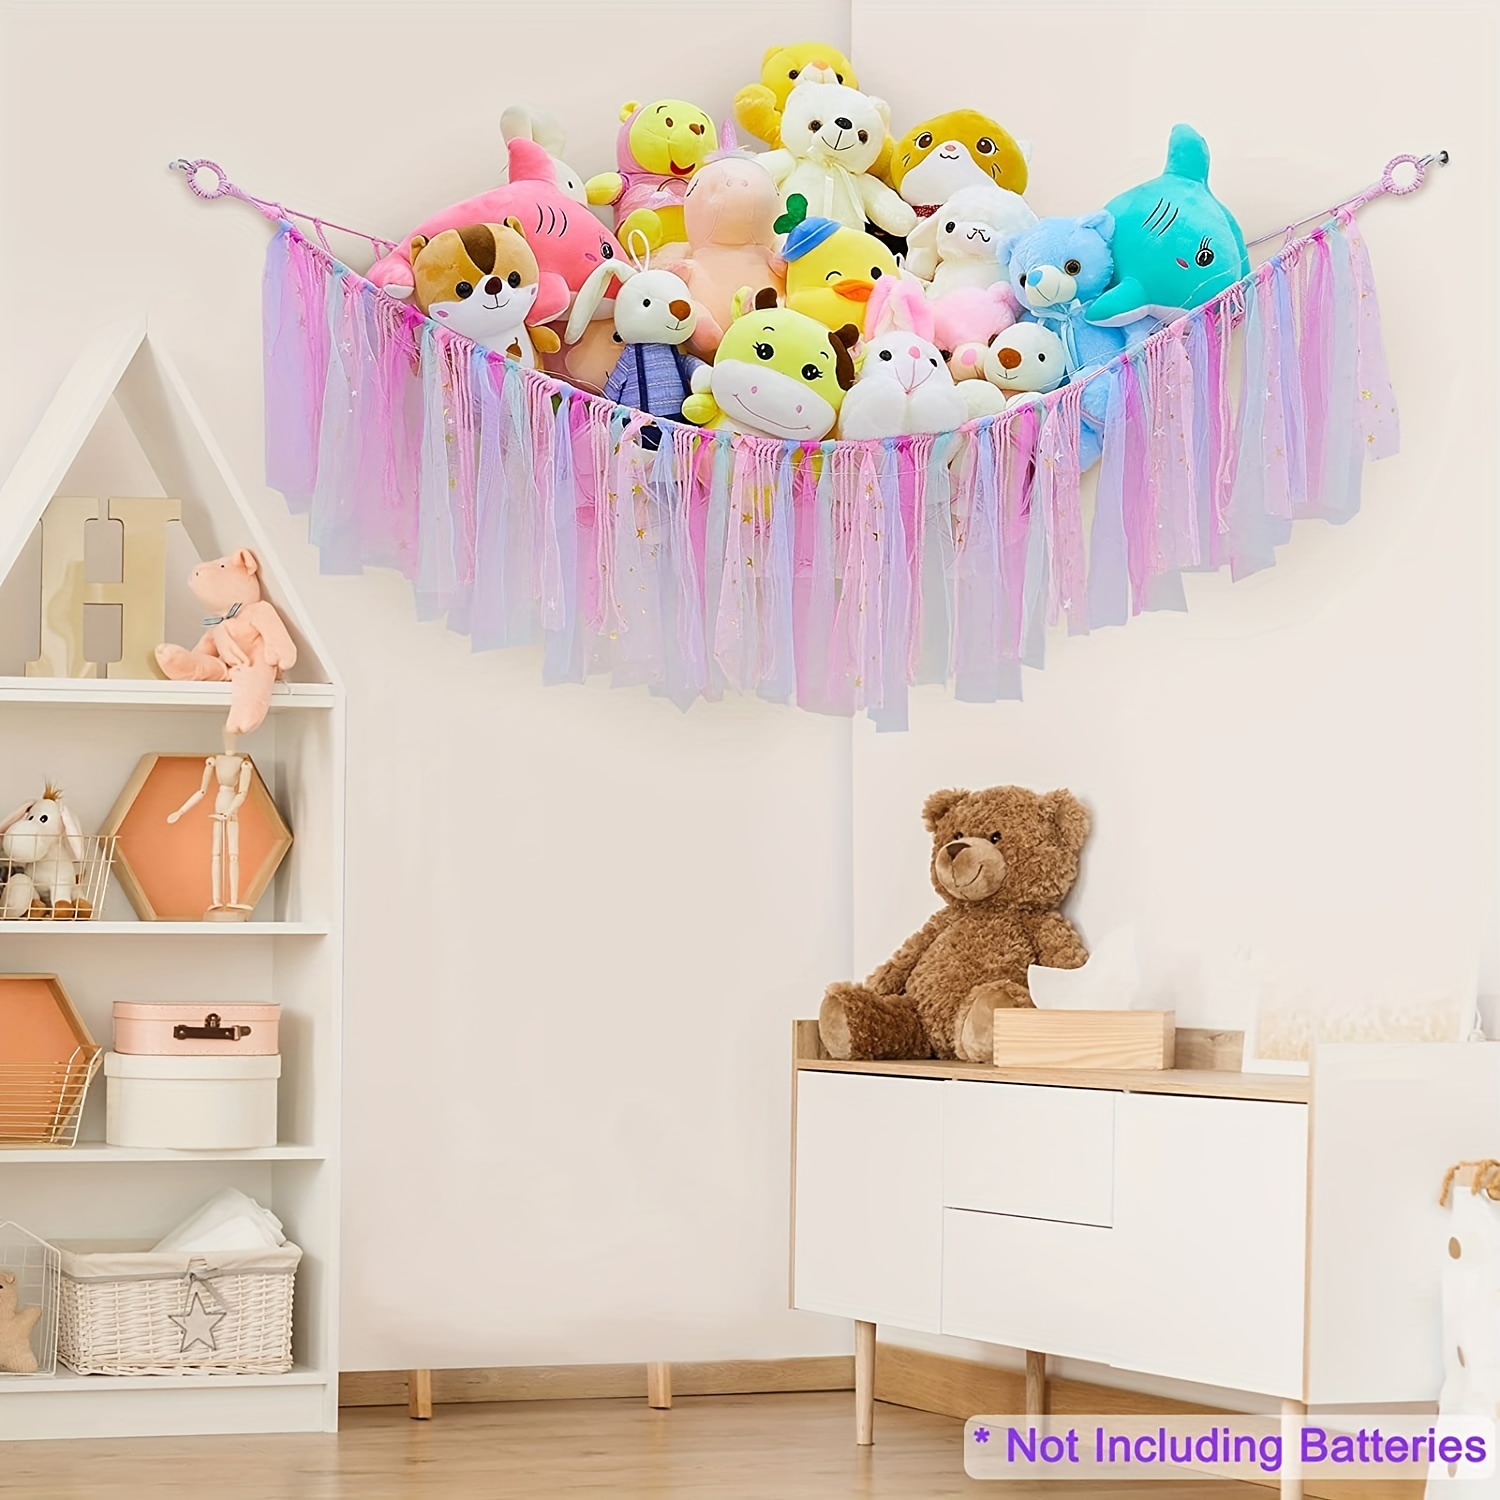 Stuffed Animal Hammock Toy Net Plush Toy Hanging Organizer With